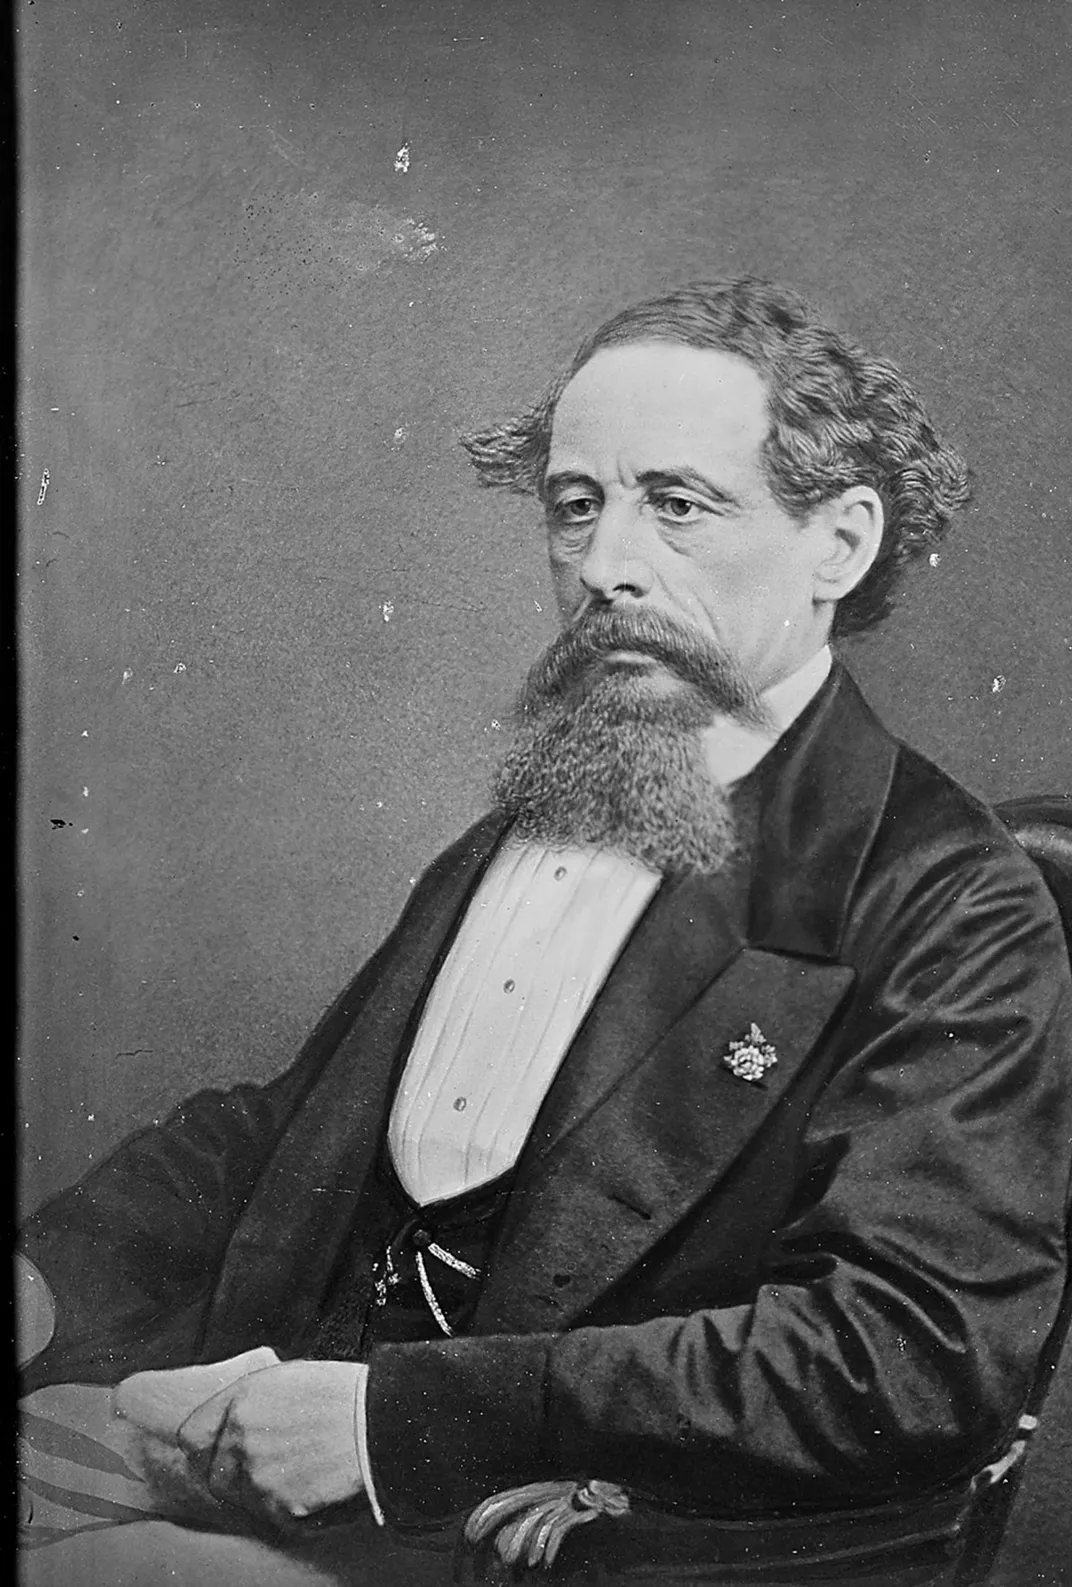 A Mathew Brady portrait of Charles Dickens